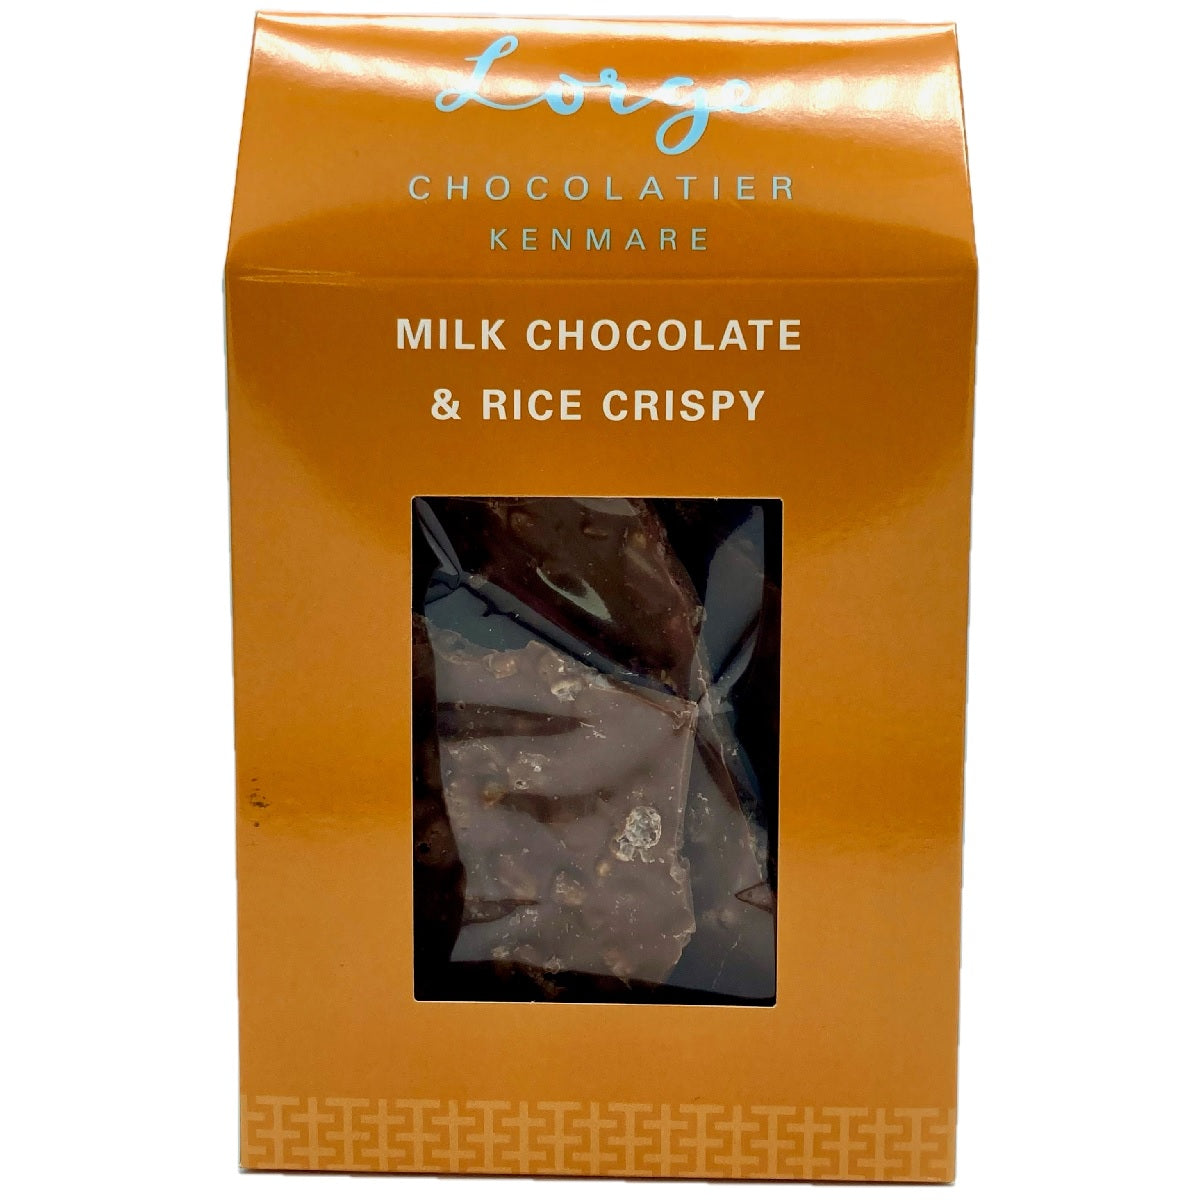 Milk Chocolate Bar — Lorge Chocolatier